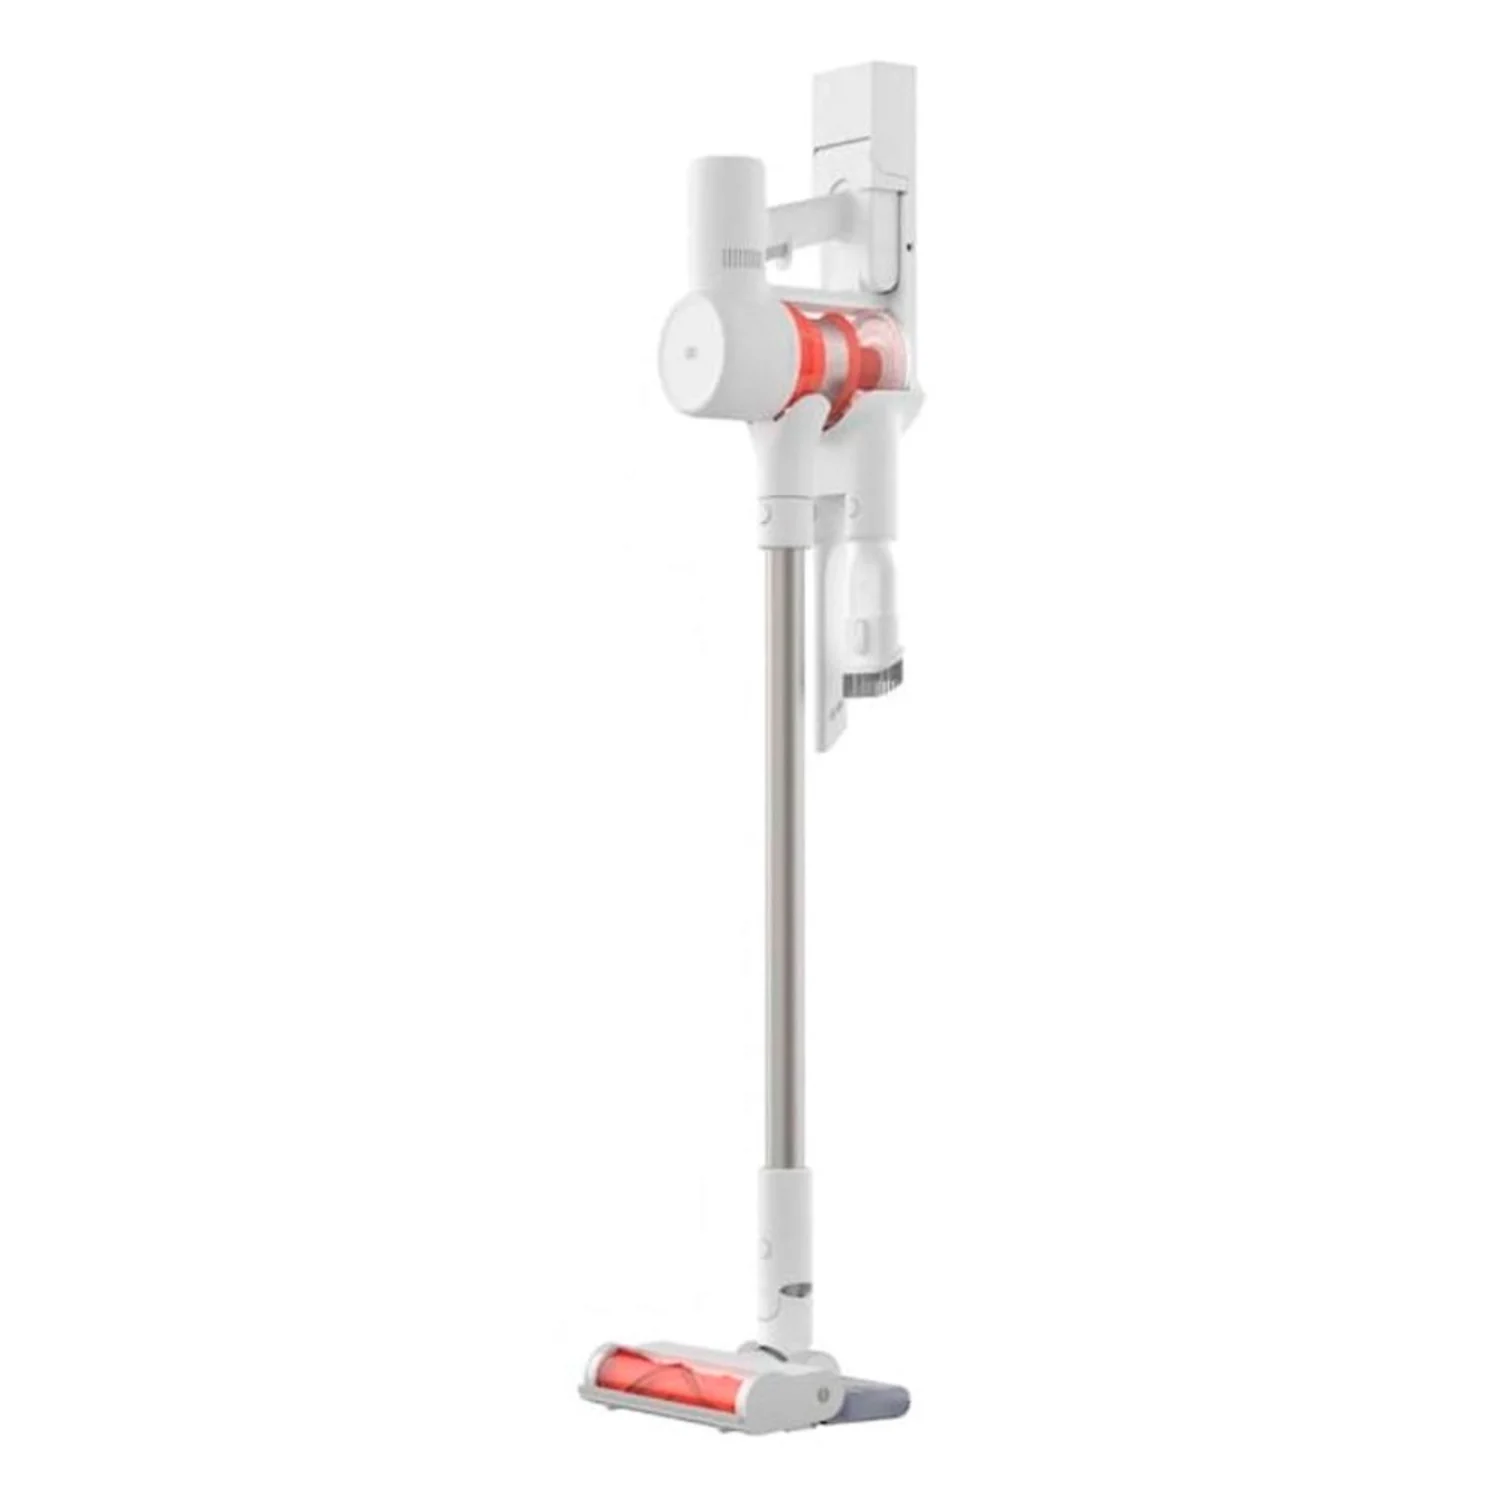 Aspirador de Limpeza Xiaomi Mi Robot Cleaner Vacuum G10-BD  BHR4307GL - Branco